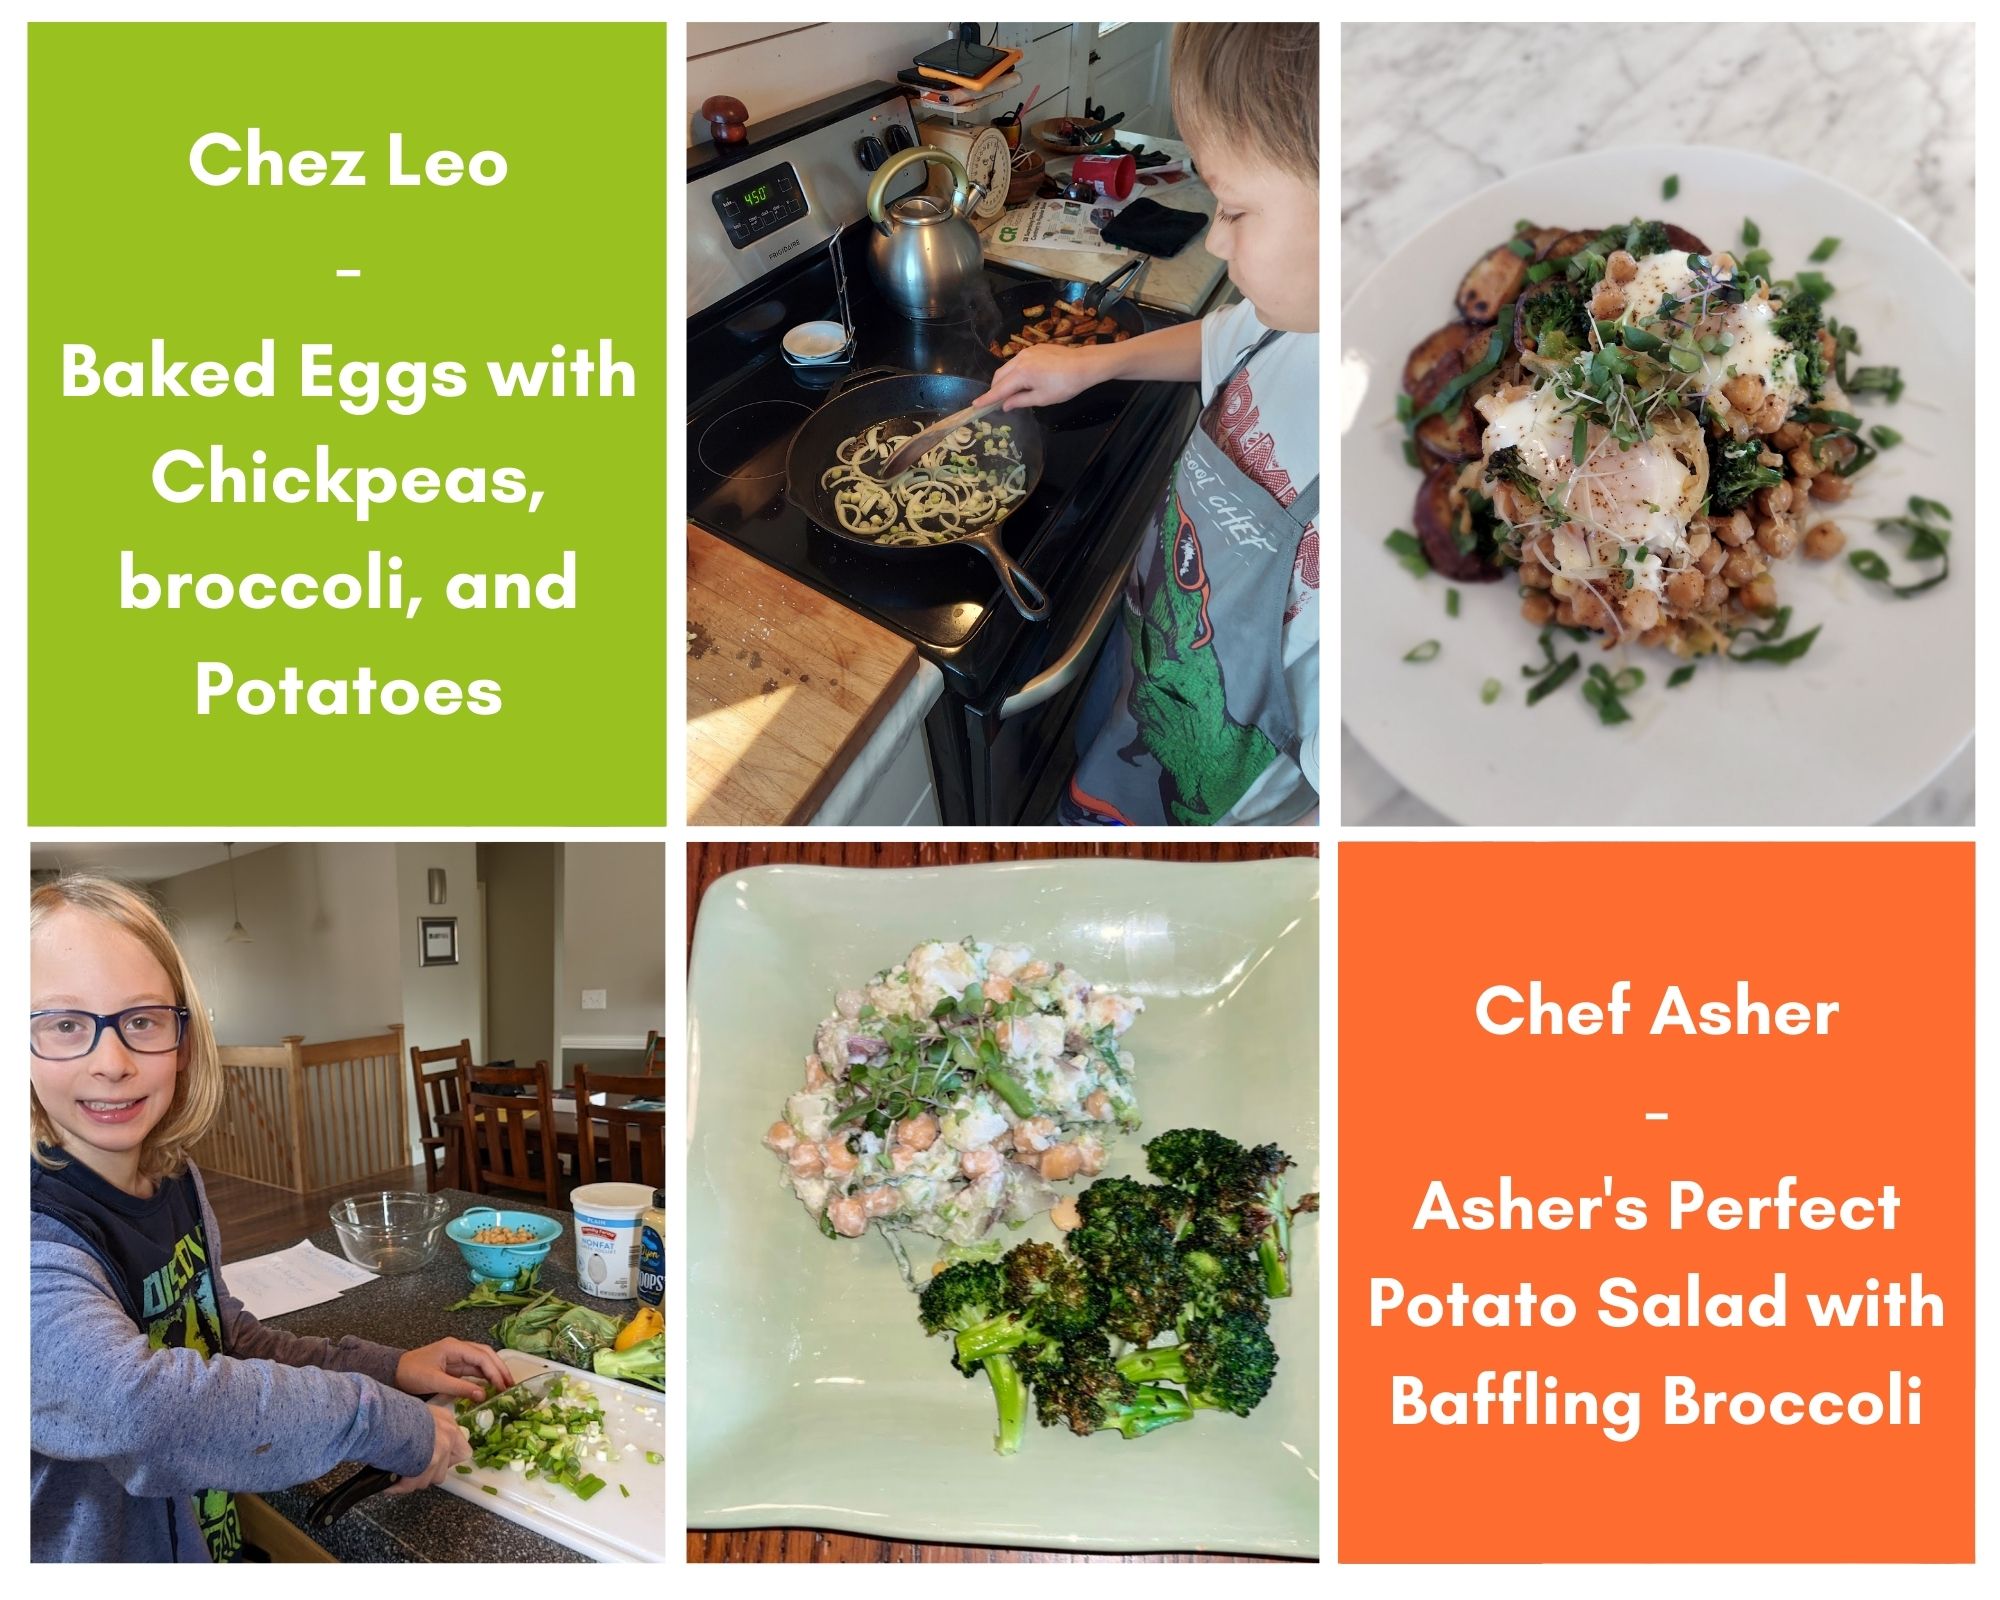 Chez Leo and Chef Asher